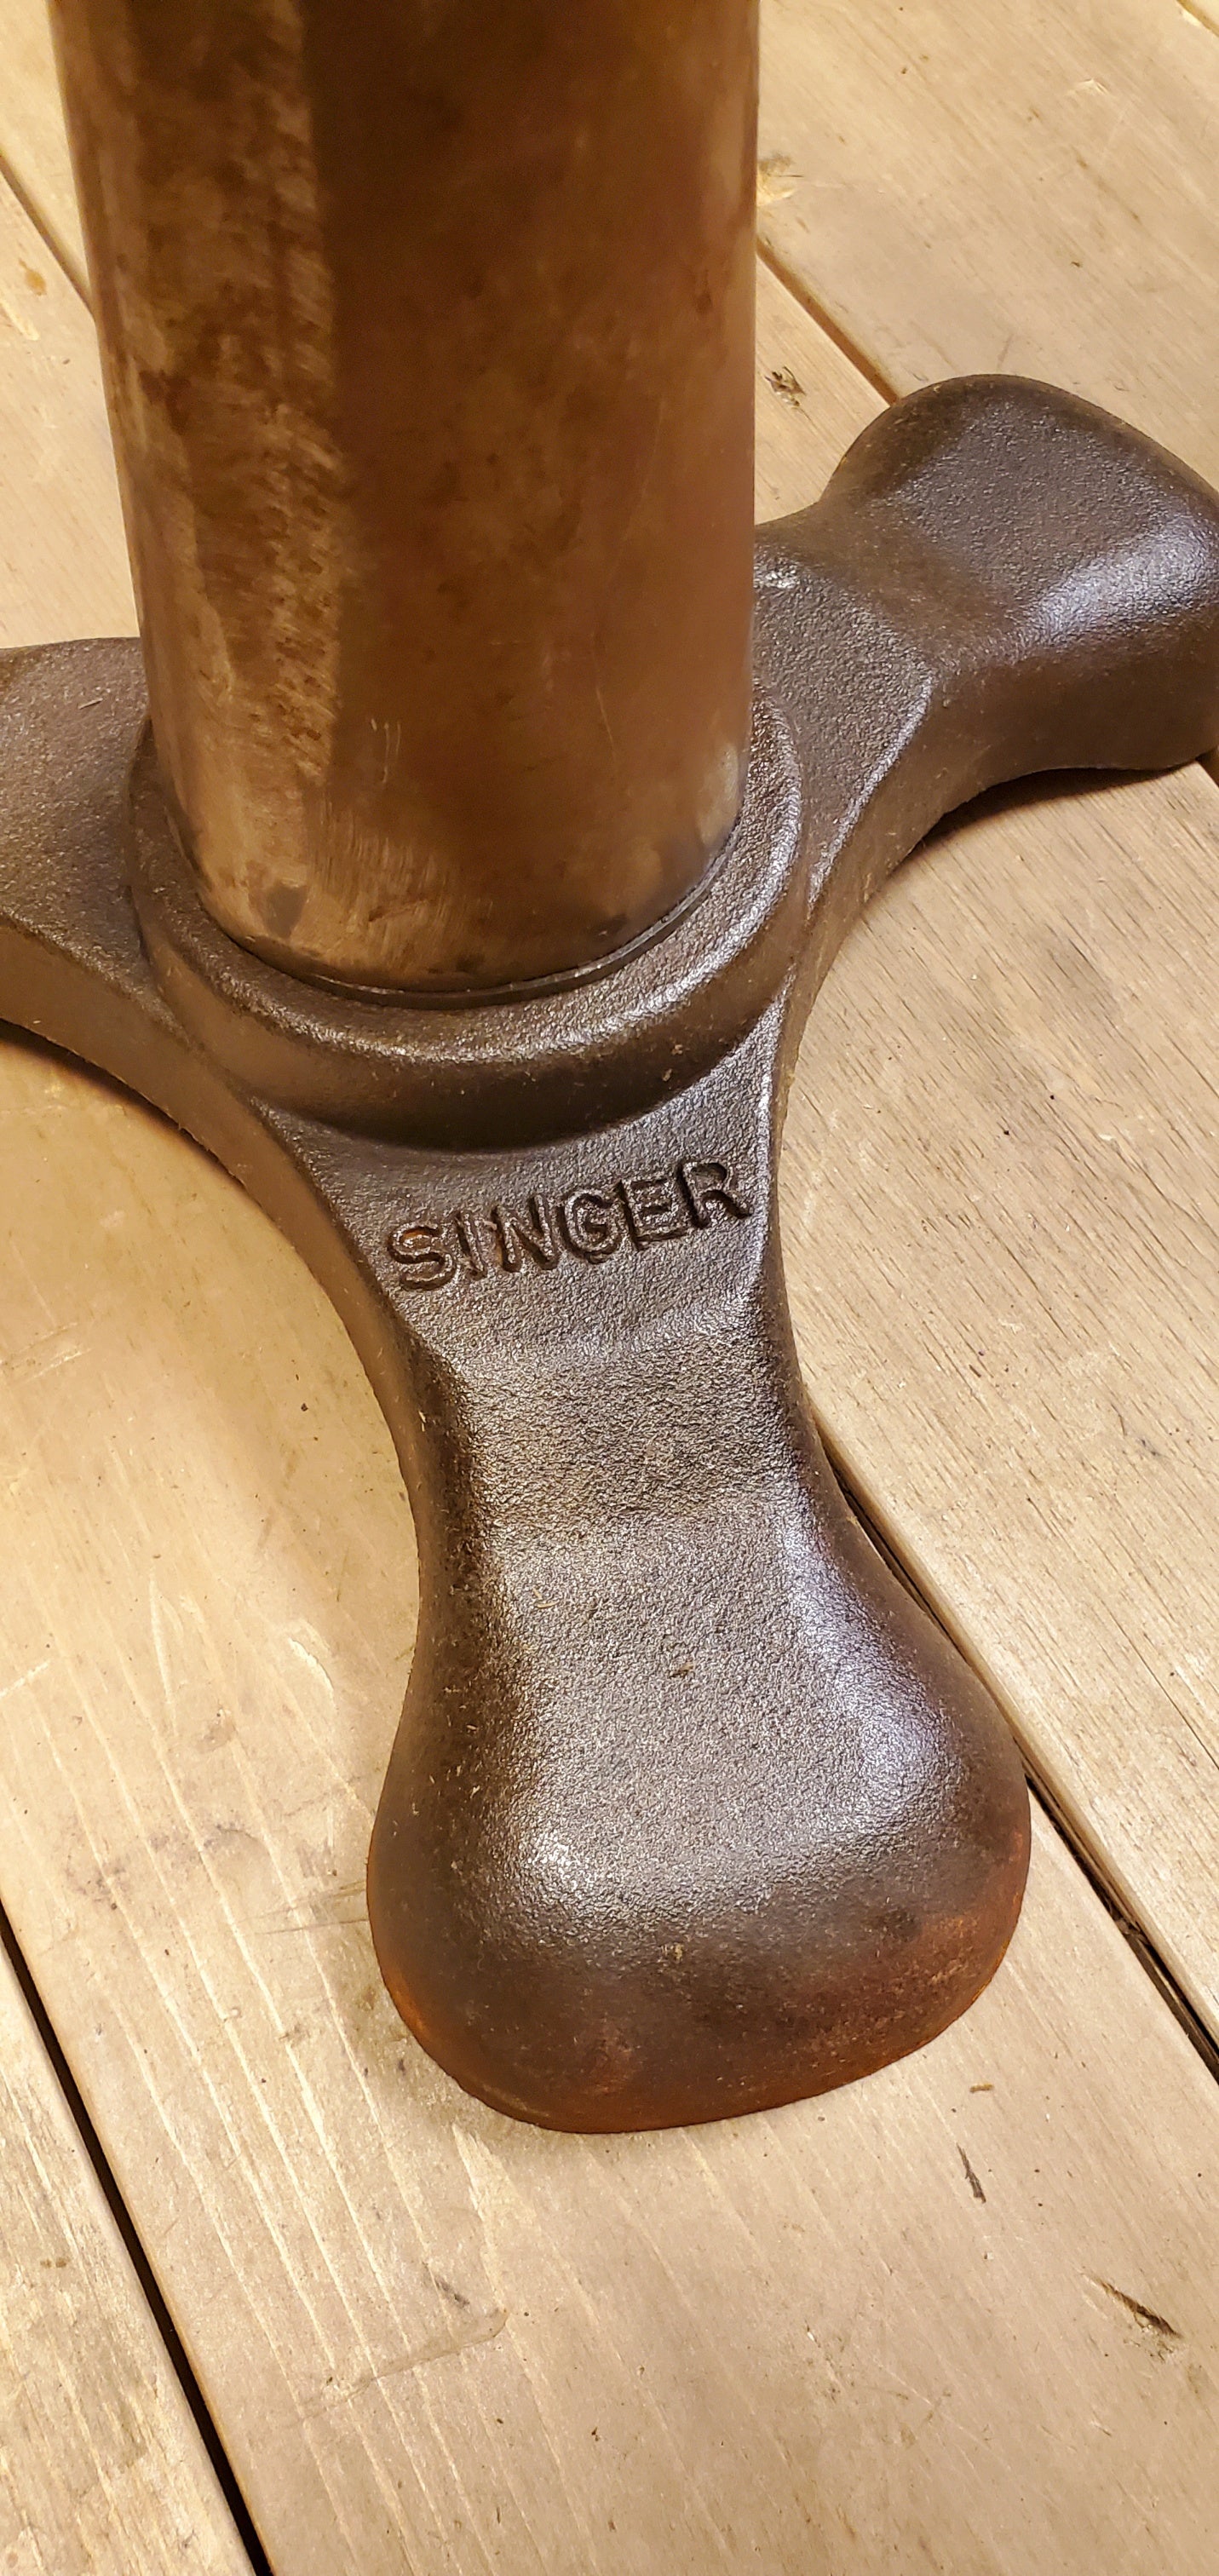 The 'Singer' Adjustable height Stool with top - Spearhead Collection - Stools - adjustable height stool, industrial stool, Singer Stool, swivel stool, vintage stool